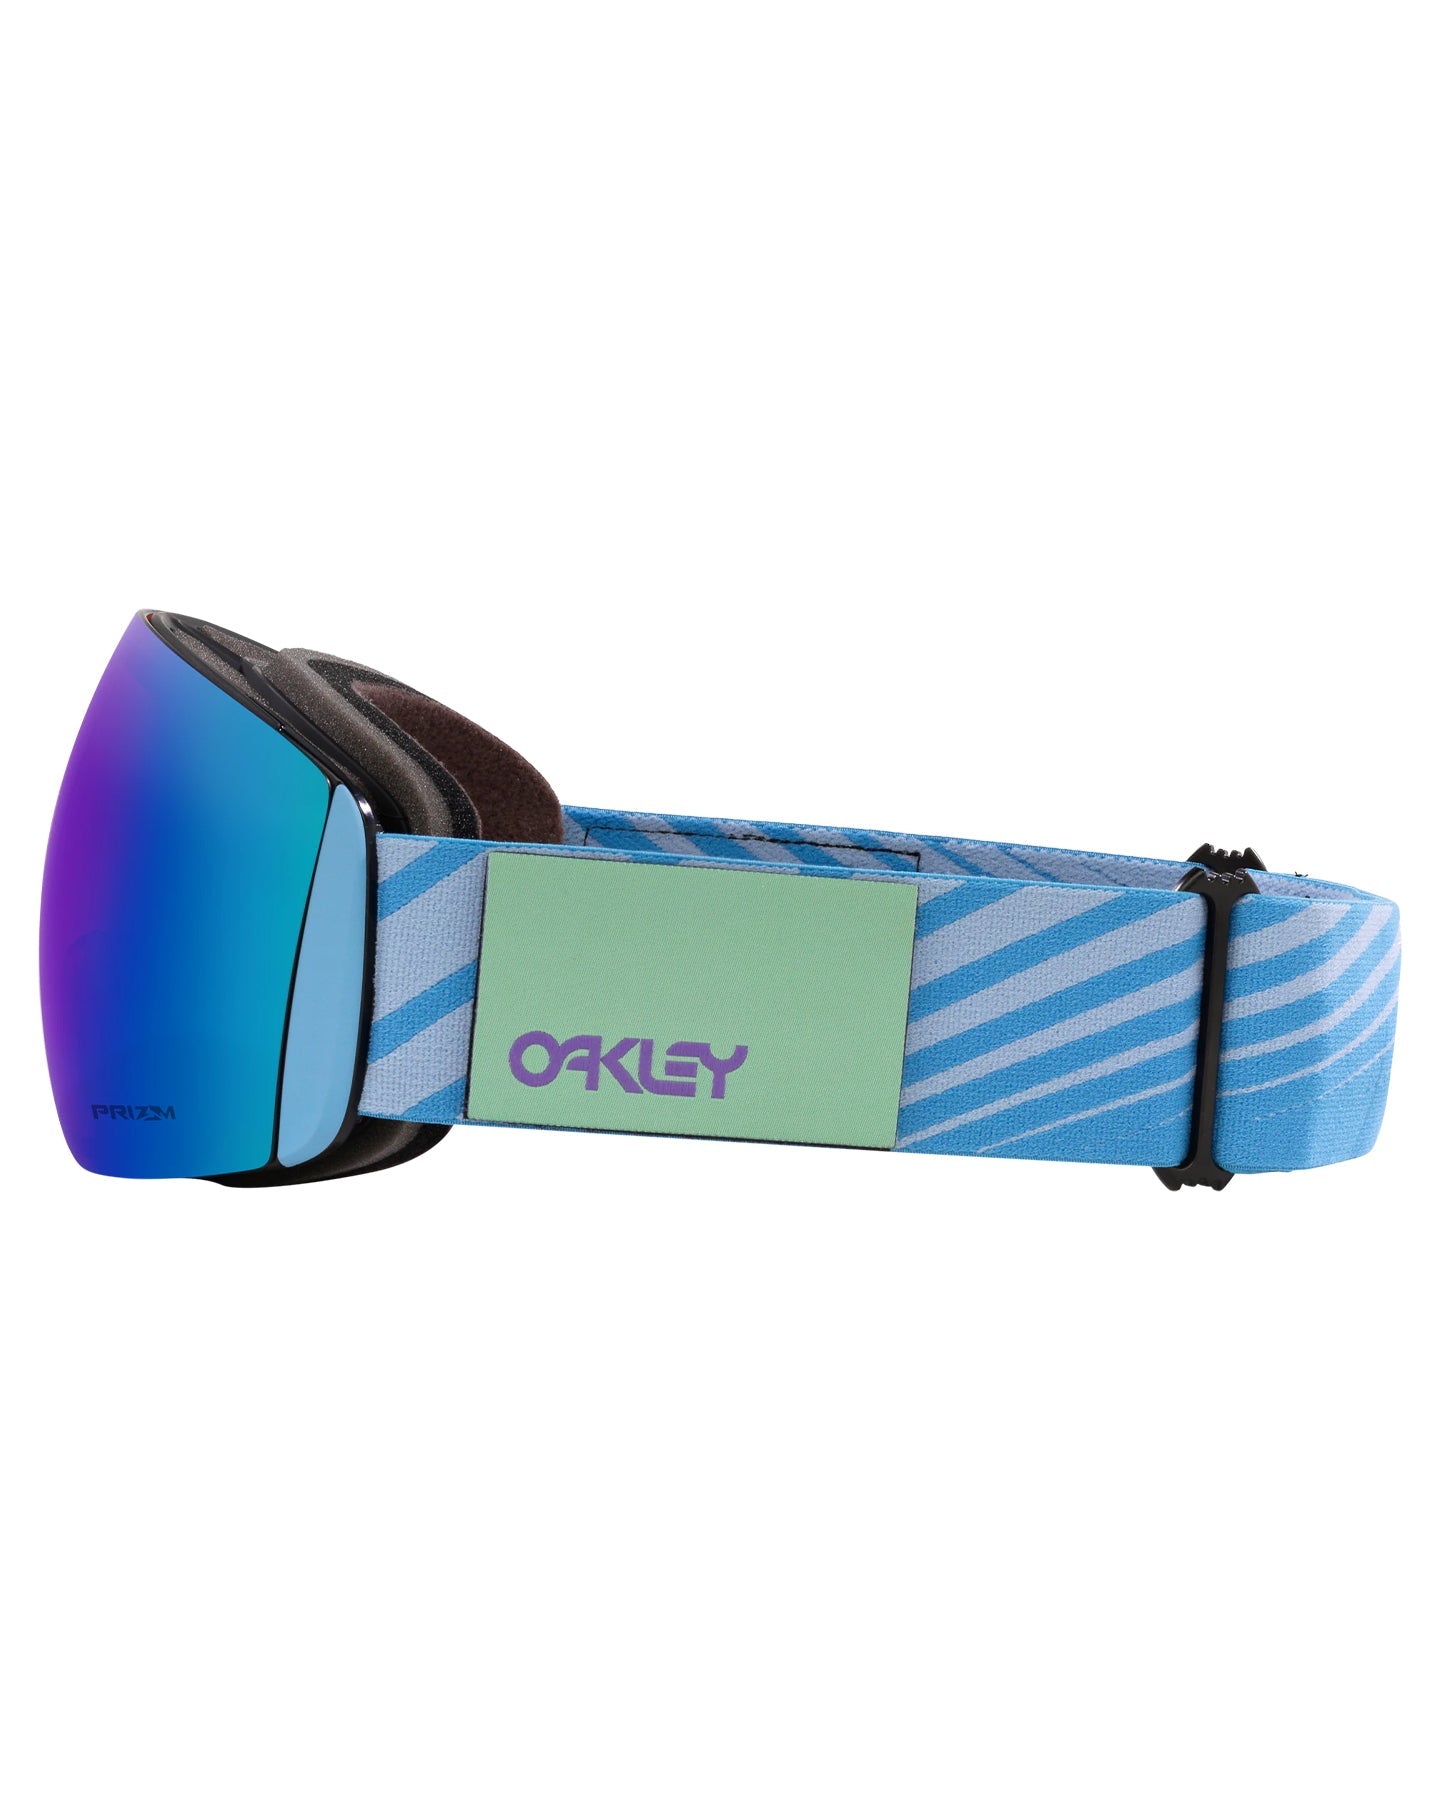 Oakley Flight Deck L Snow Goggles - Fraktel Stonewash W/ Prizm Argon Iridium Lens Men's Snow Goggles - Trojan Wake Ski Snow